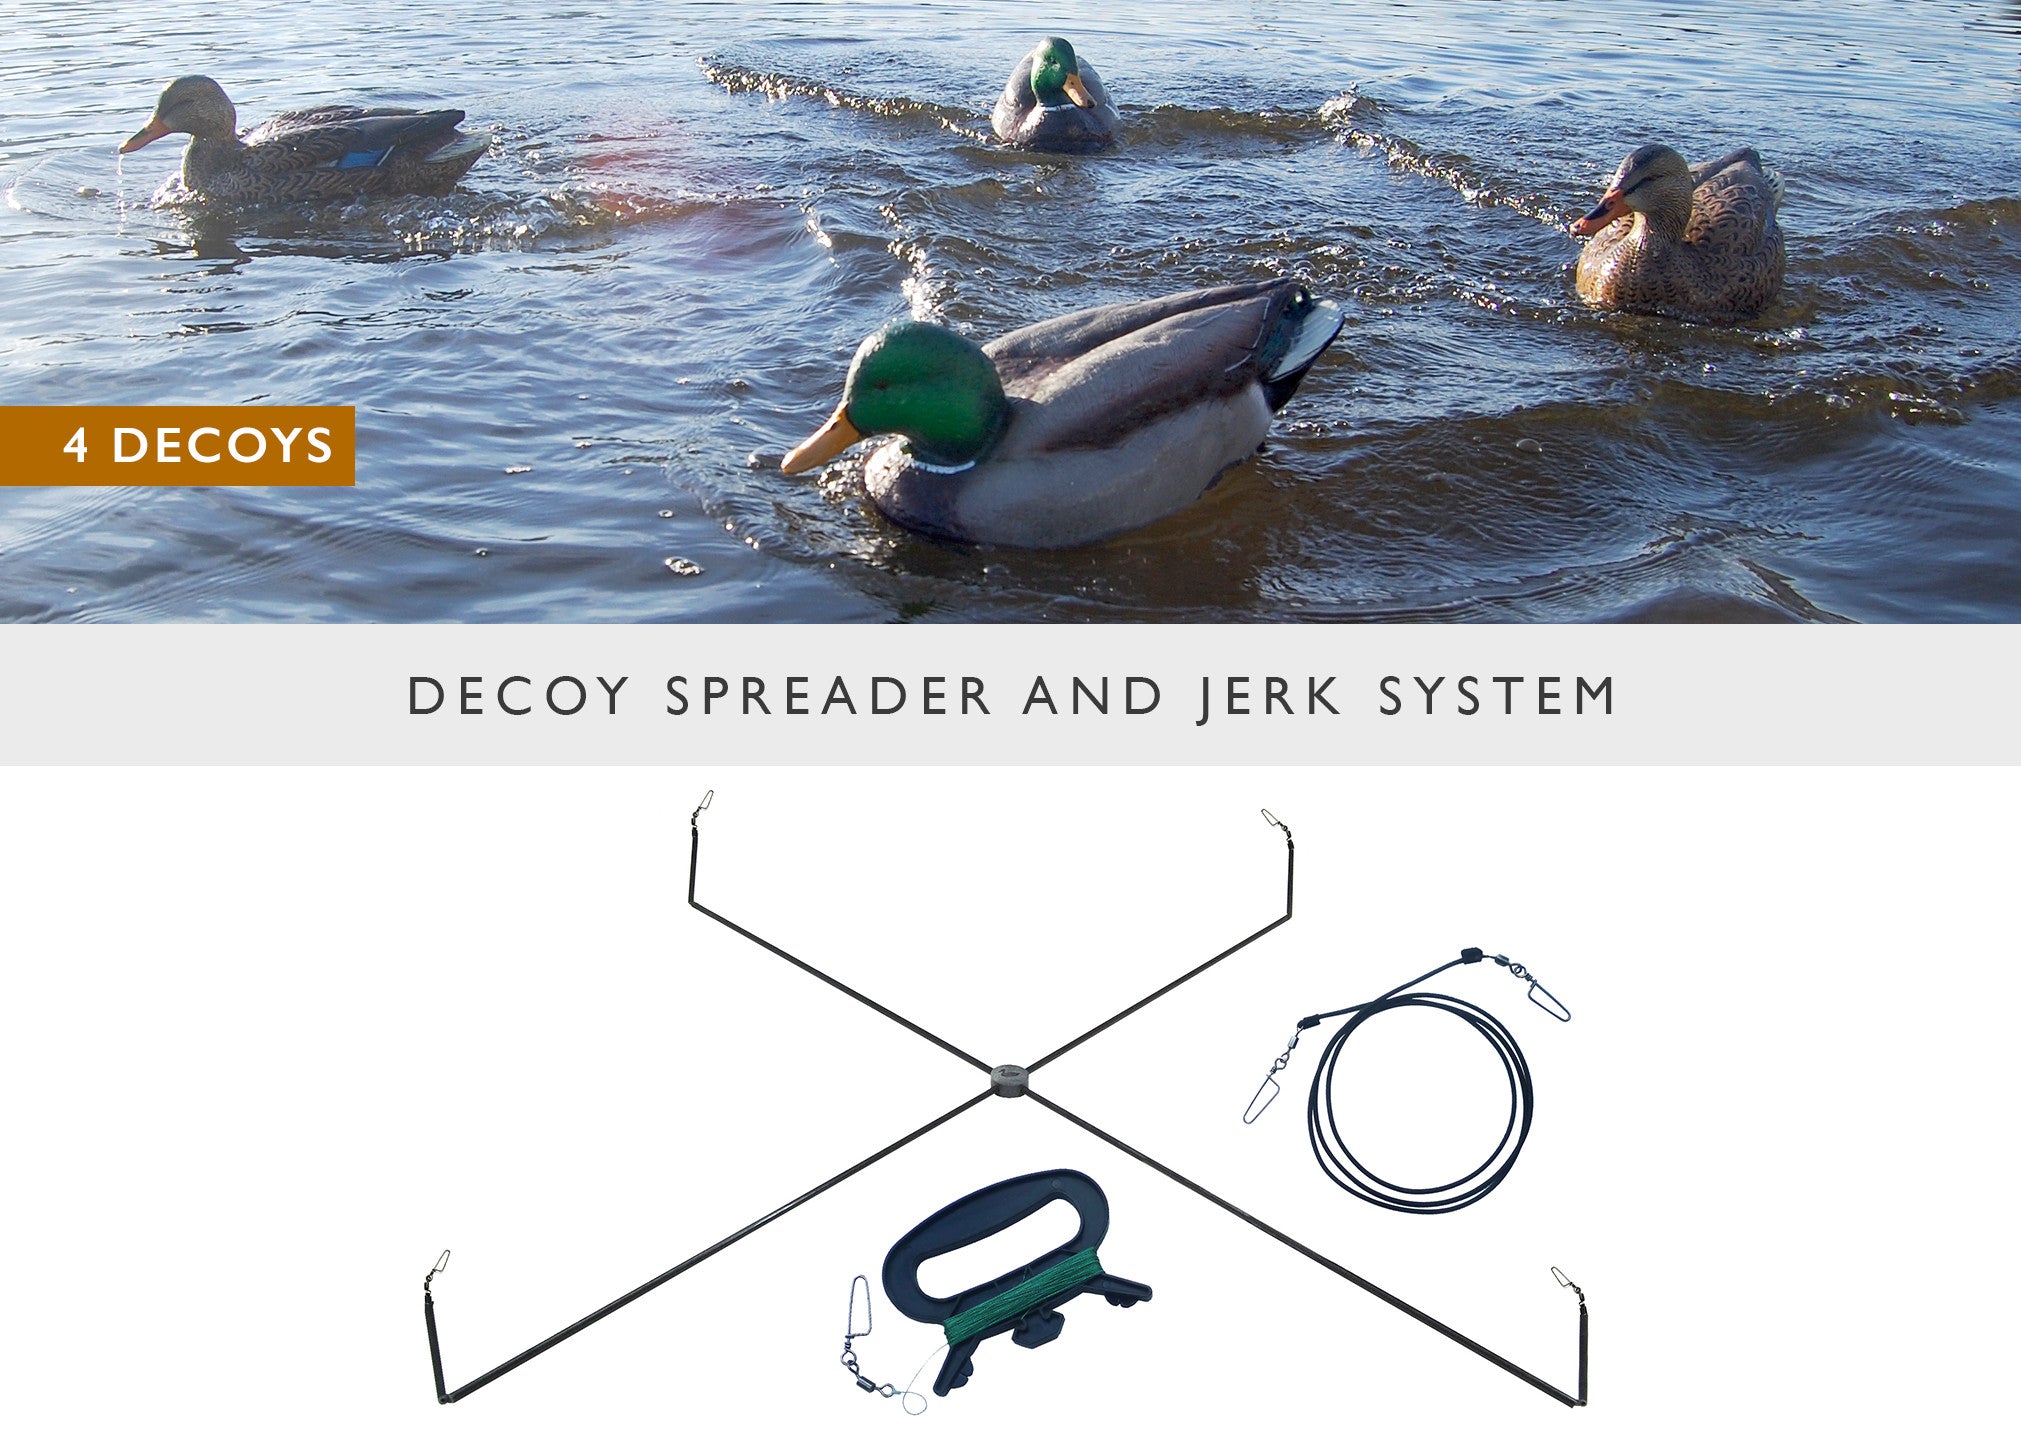 Decoy Spreader System and Jerk Rig from Motion Ducks - Motion